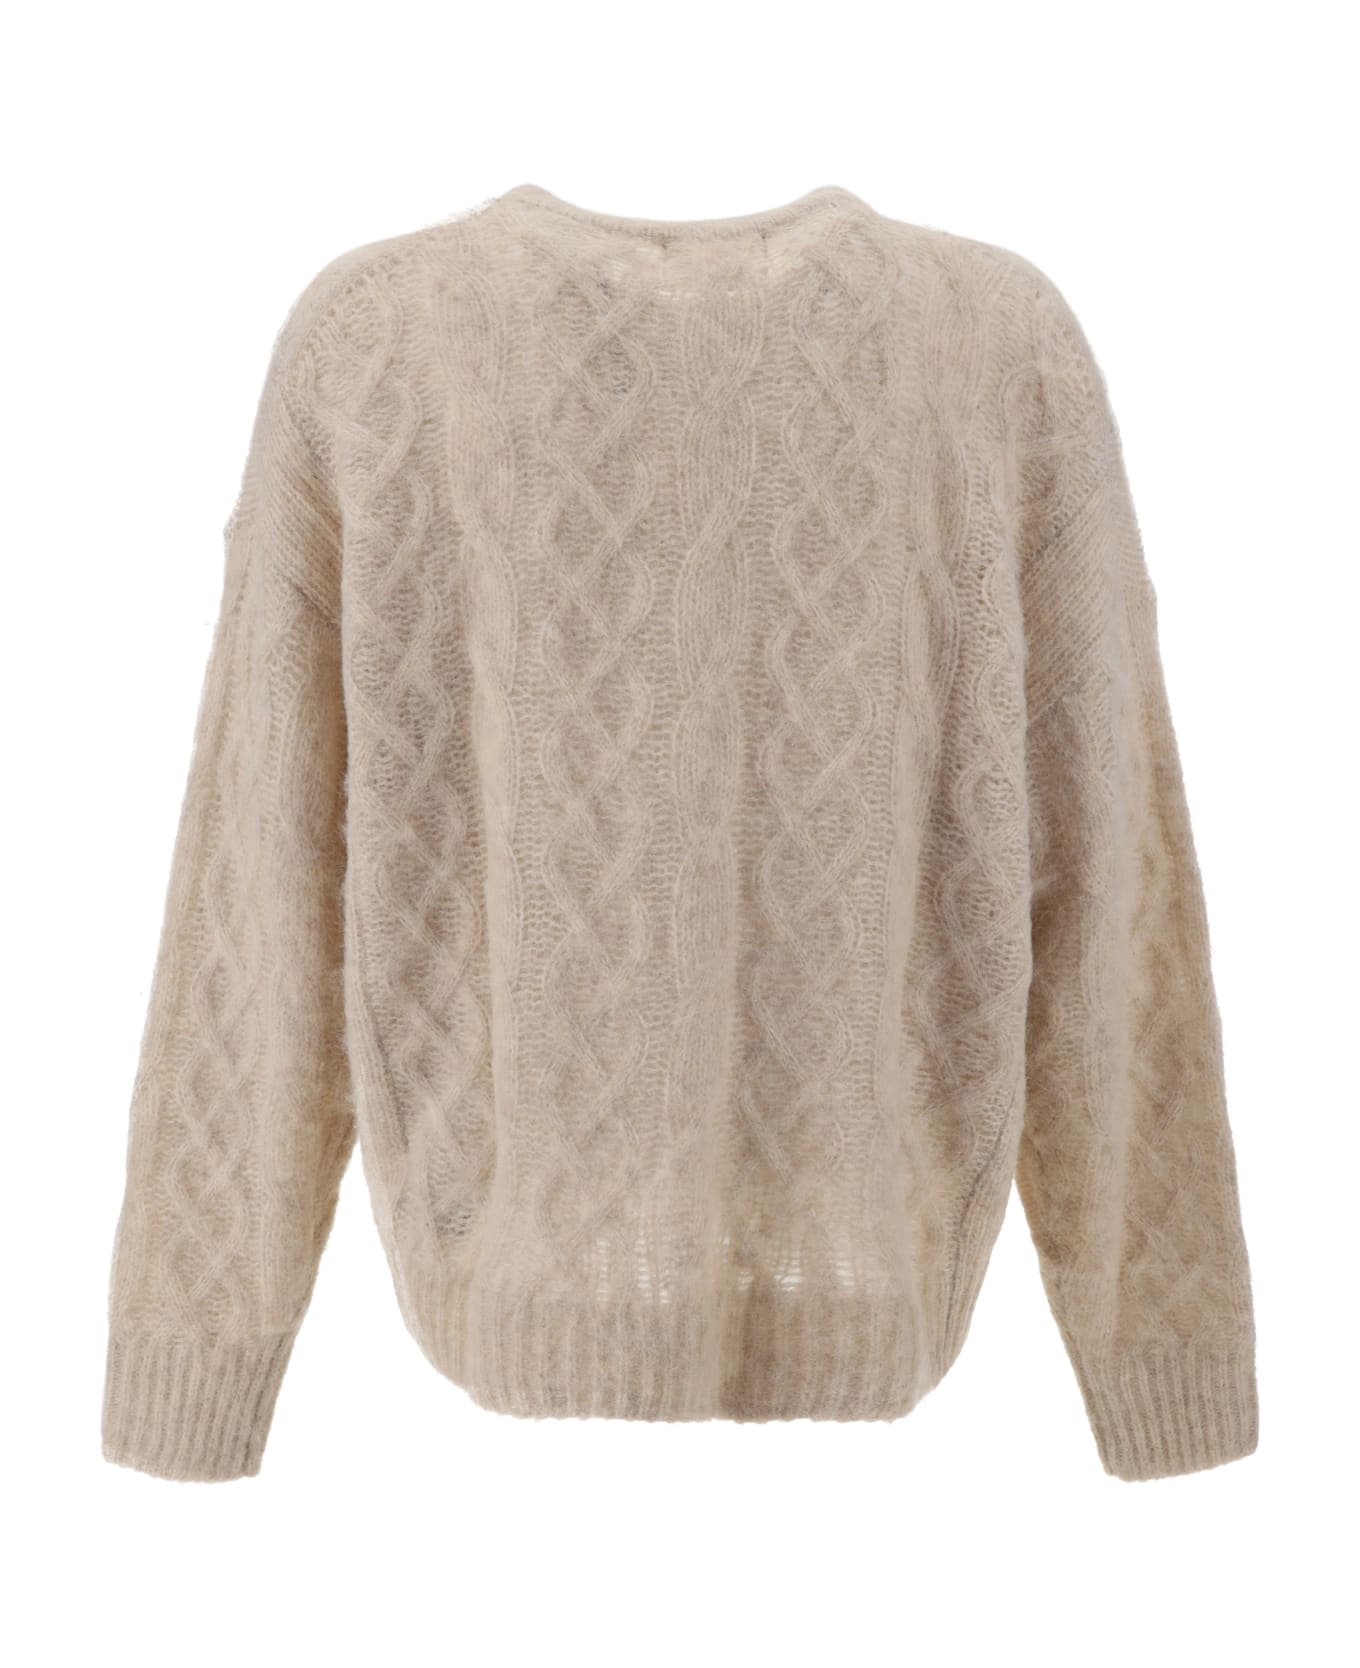 Isabel Marant Anson Sweater - Light Beige